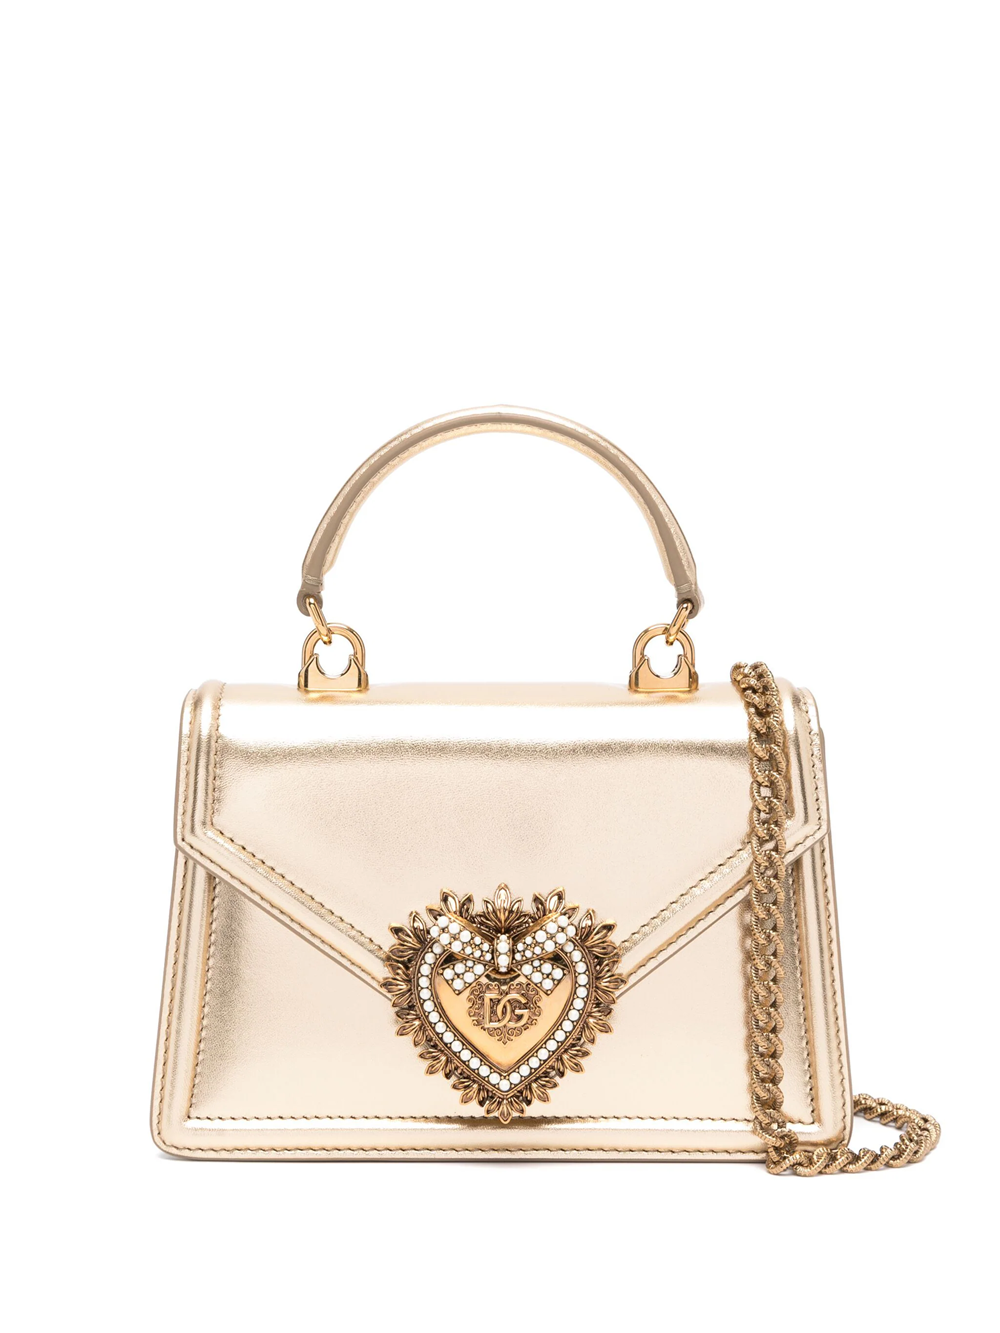 Dolce & Gabbana Small Devotion Shoulder Bag In Metallic